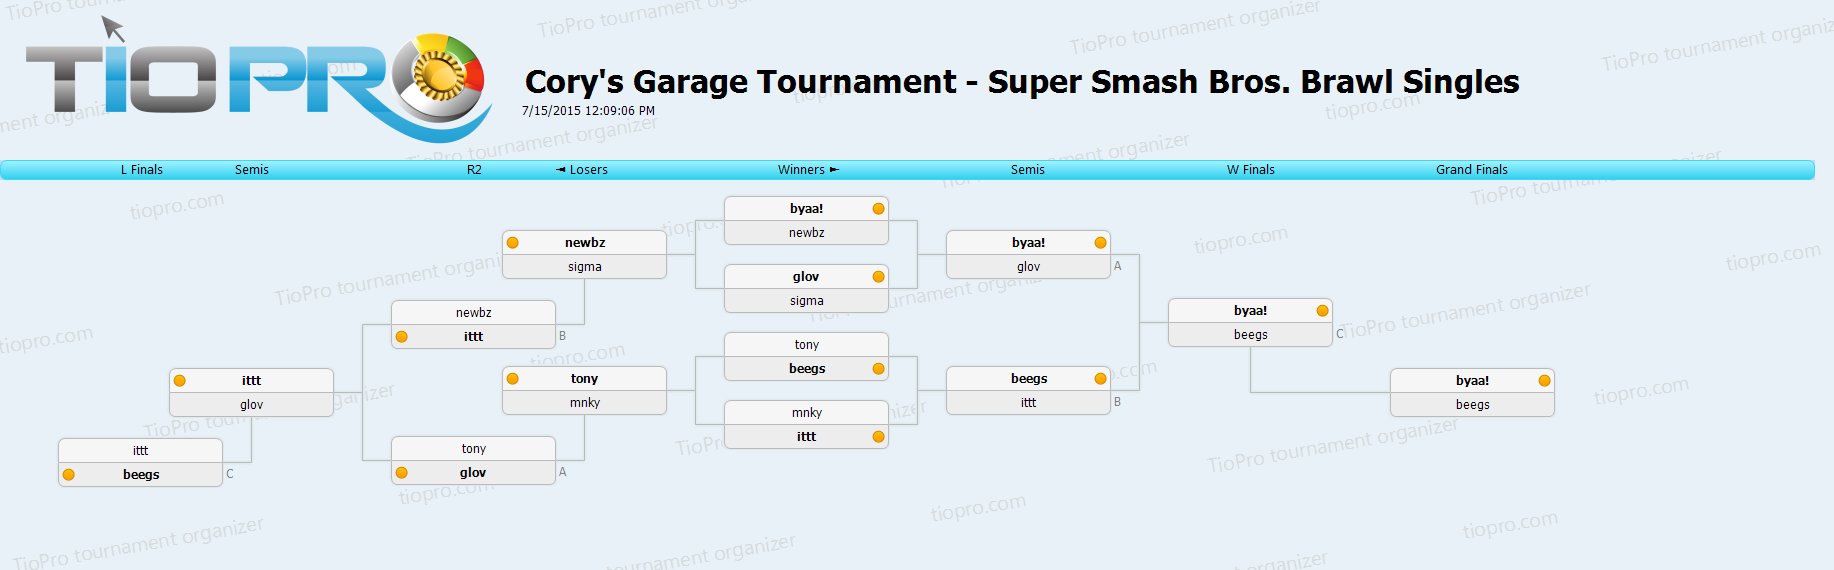 Cory's Garage Tournament - Super Smash Bros. Brawl Singles